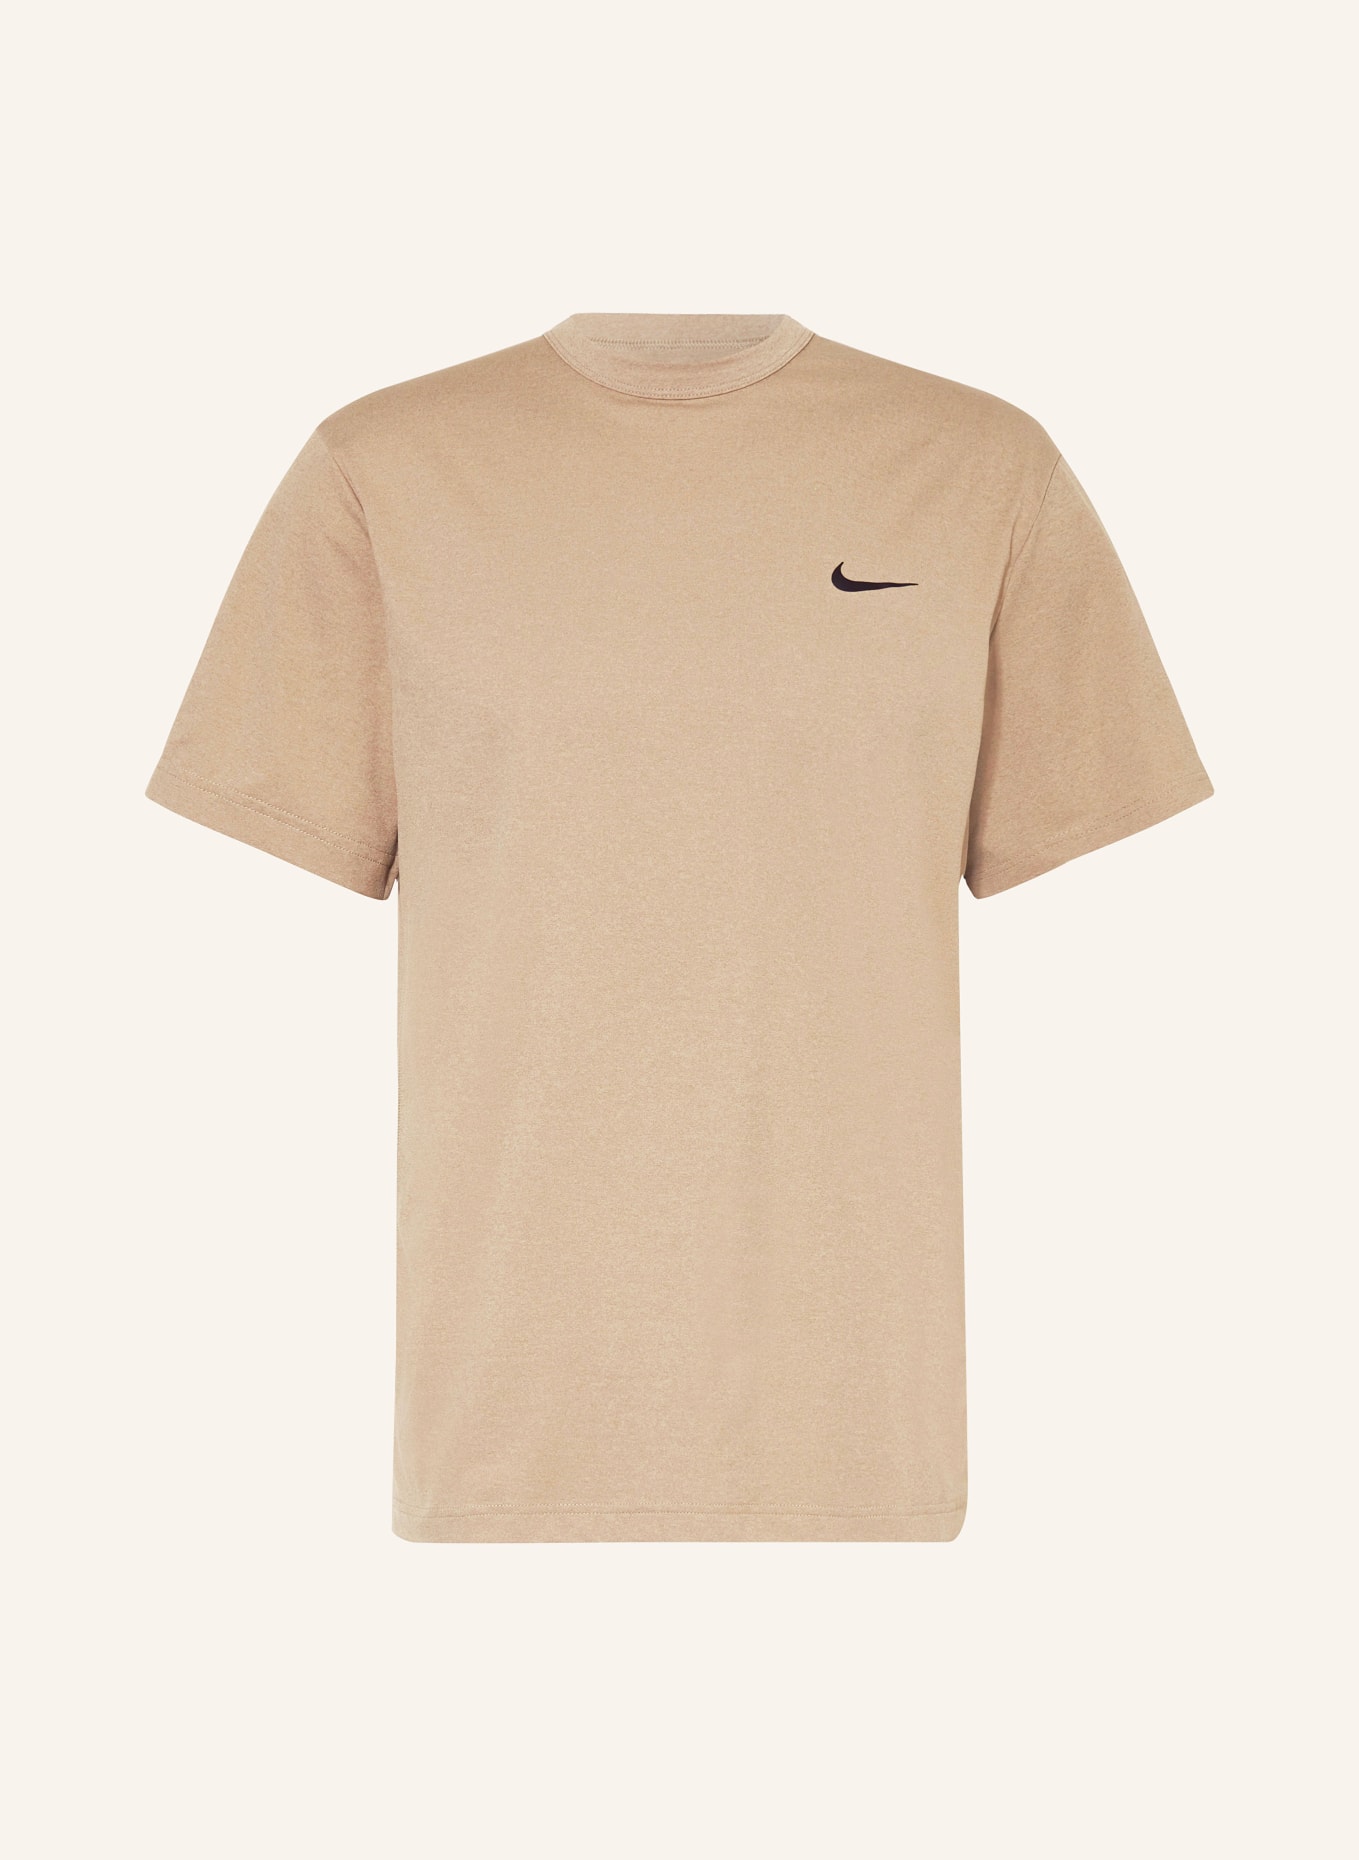 Nike T-Shirt HYVERSE mit UV-Schutz, Farbe: KHAKI (Bild 1)